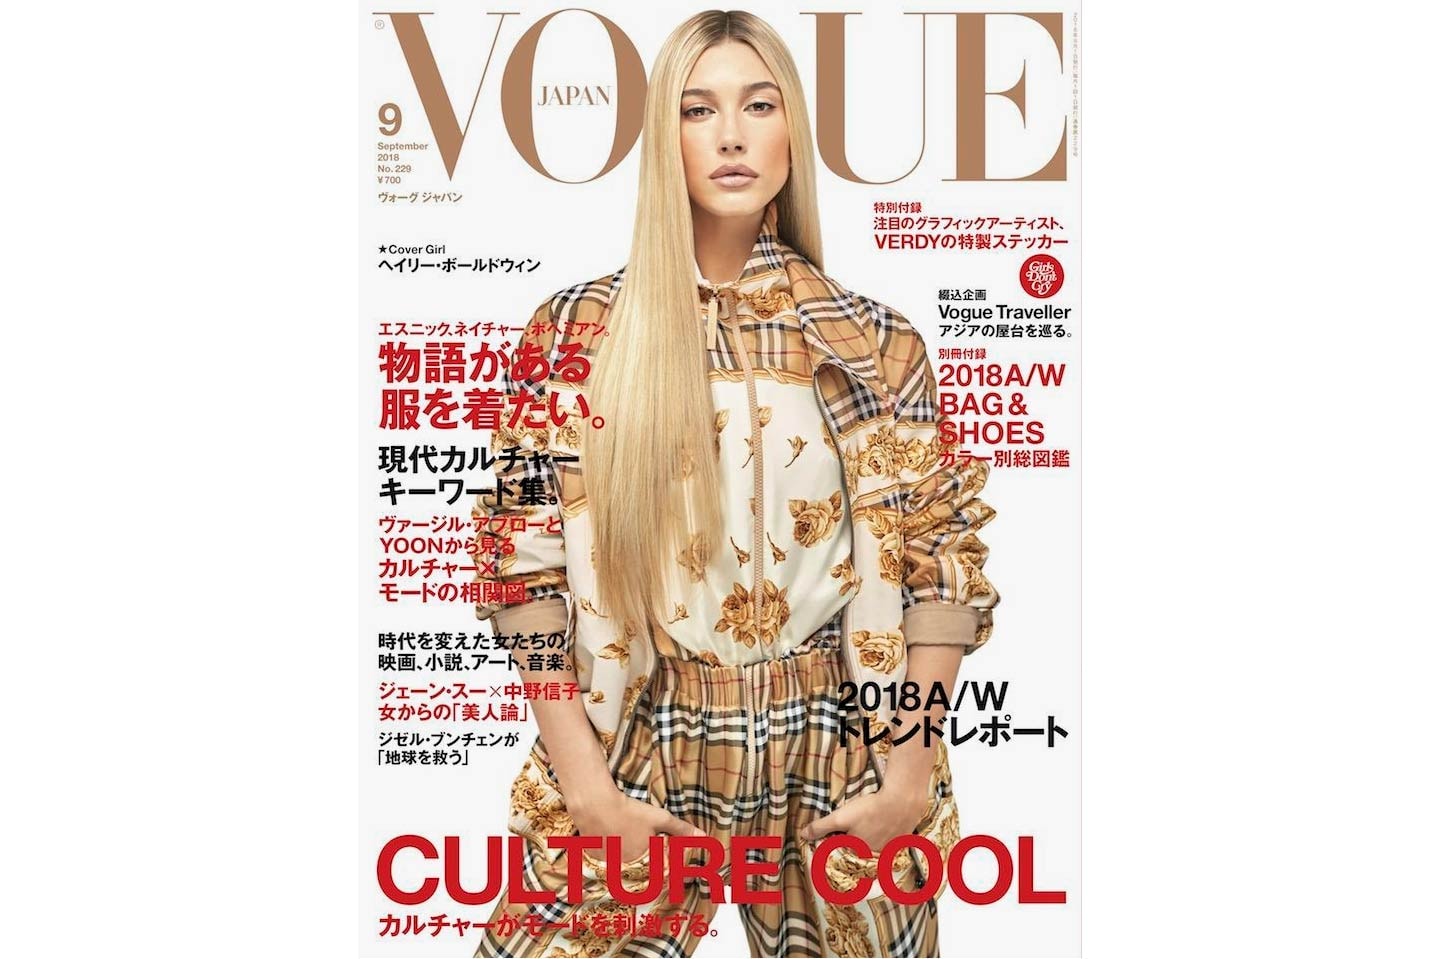 Hailey Baldwin Vogue Japan September 2018 Cover